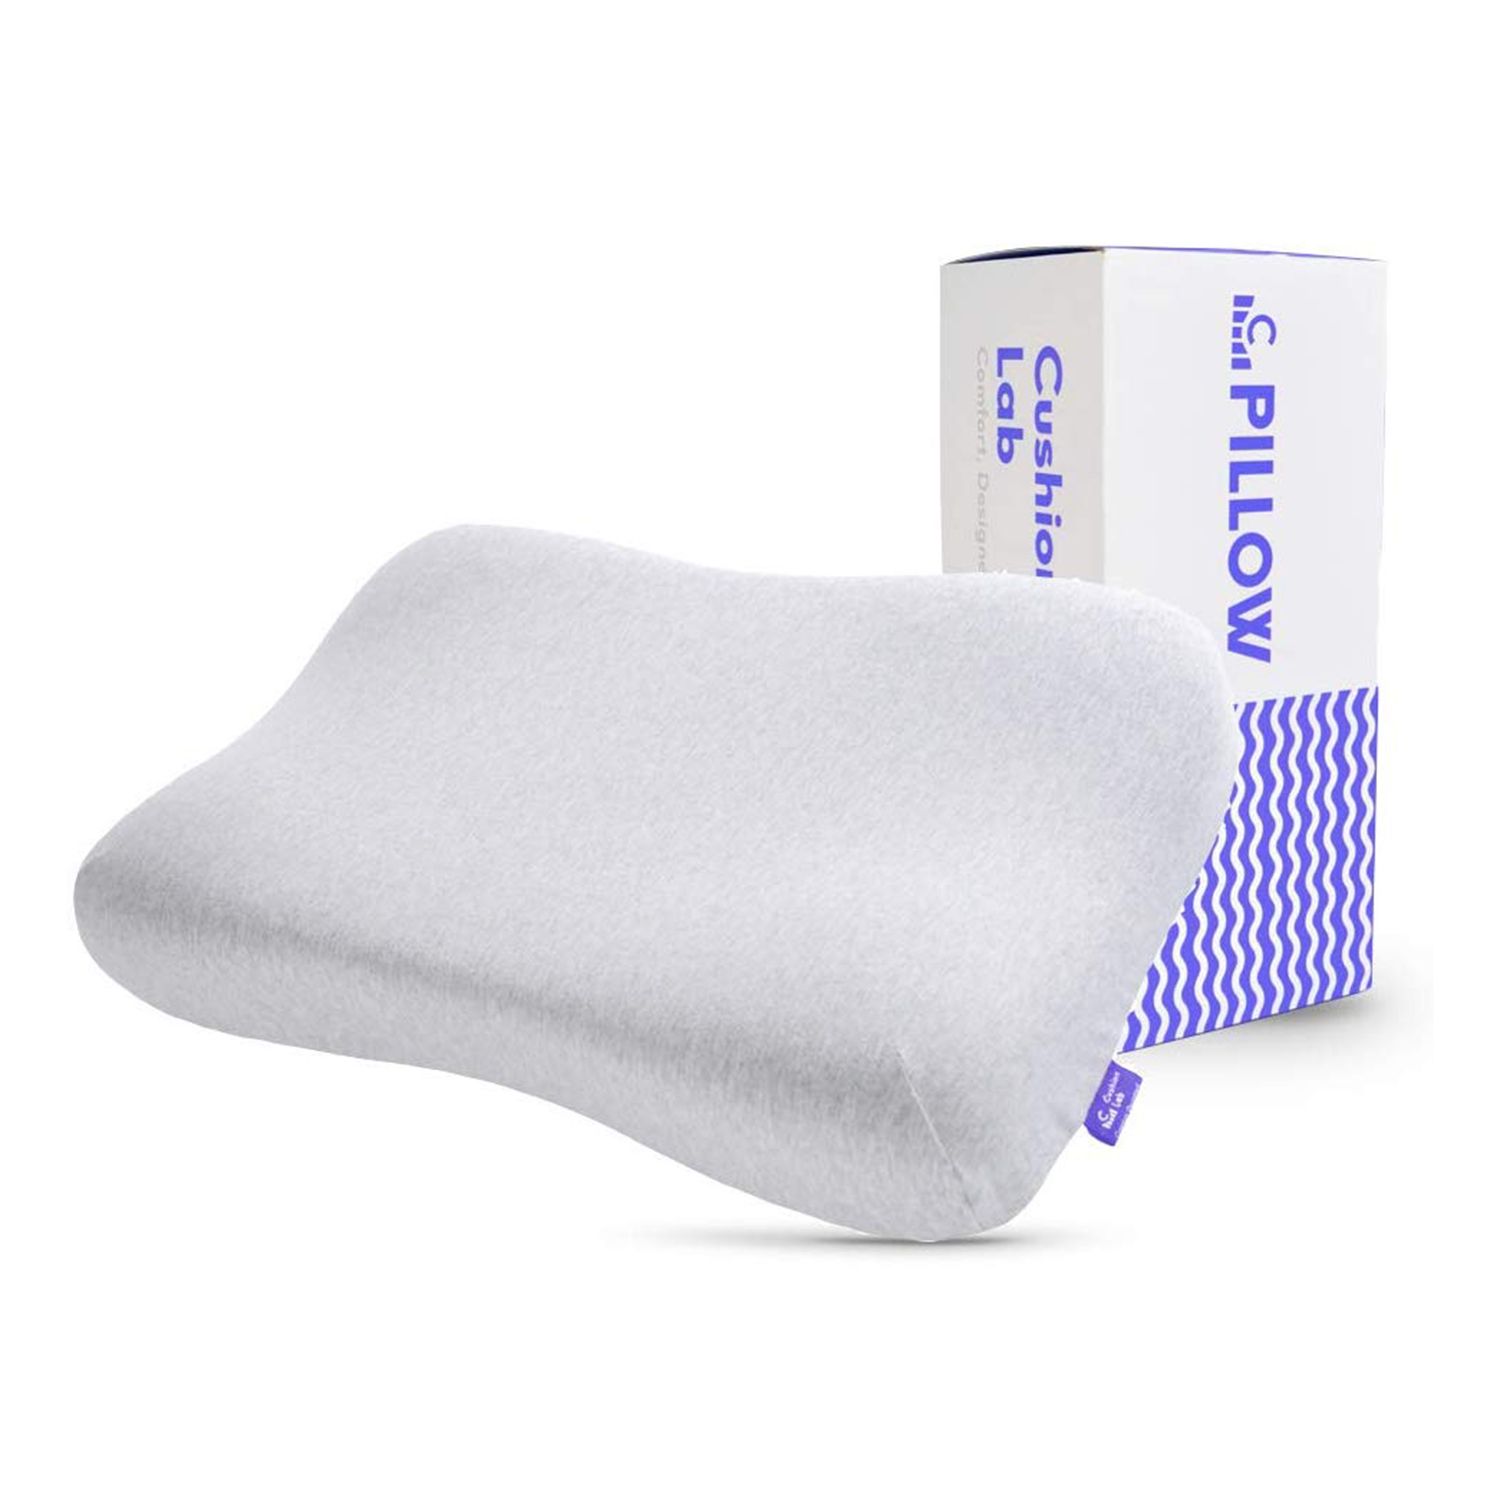 Cushion Lab Plush Comfort Gel Infused Memory Foam Contour Pillow